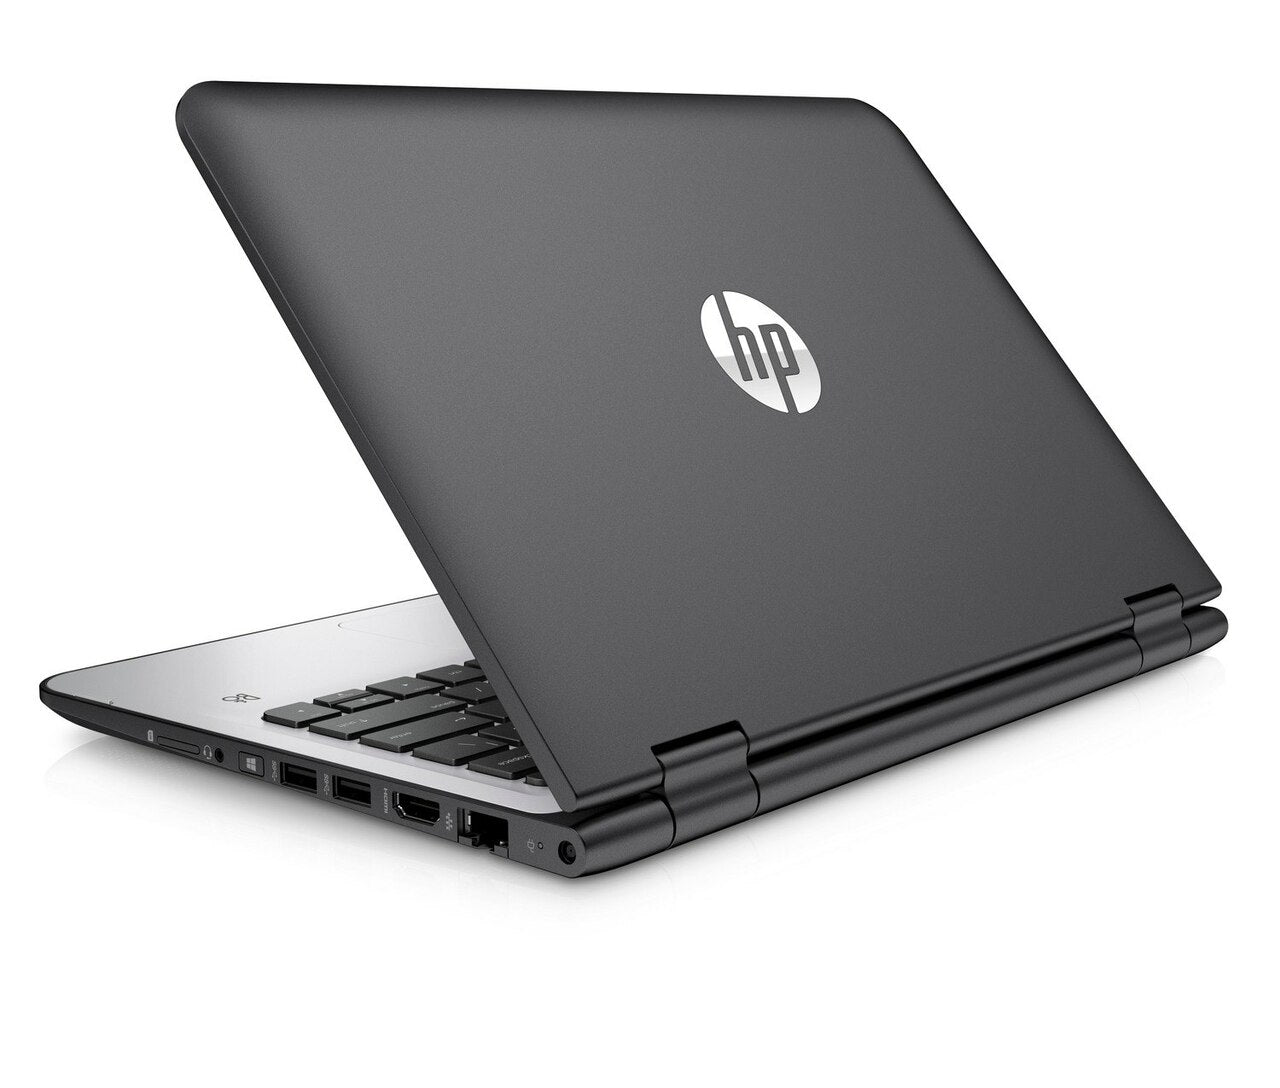 HP X360 310 G2 Touchscreen Laptop Refurbished